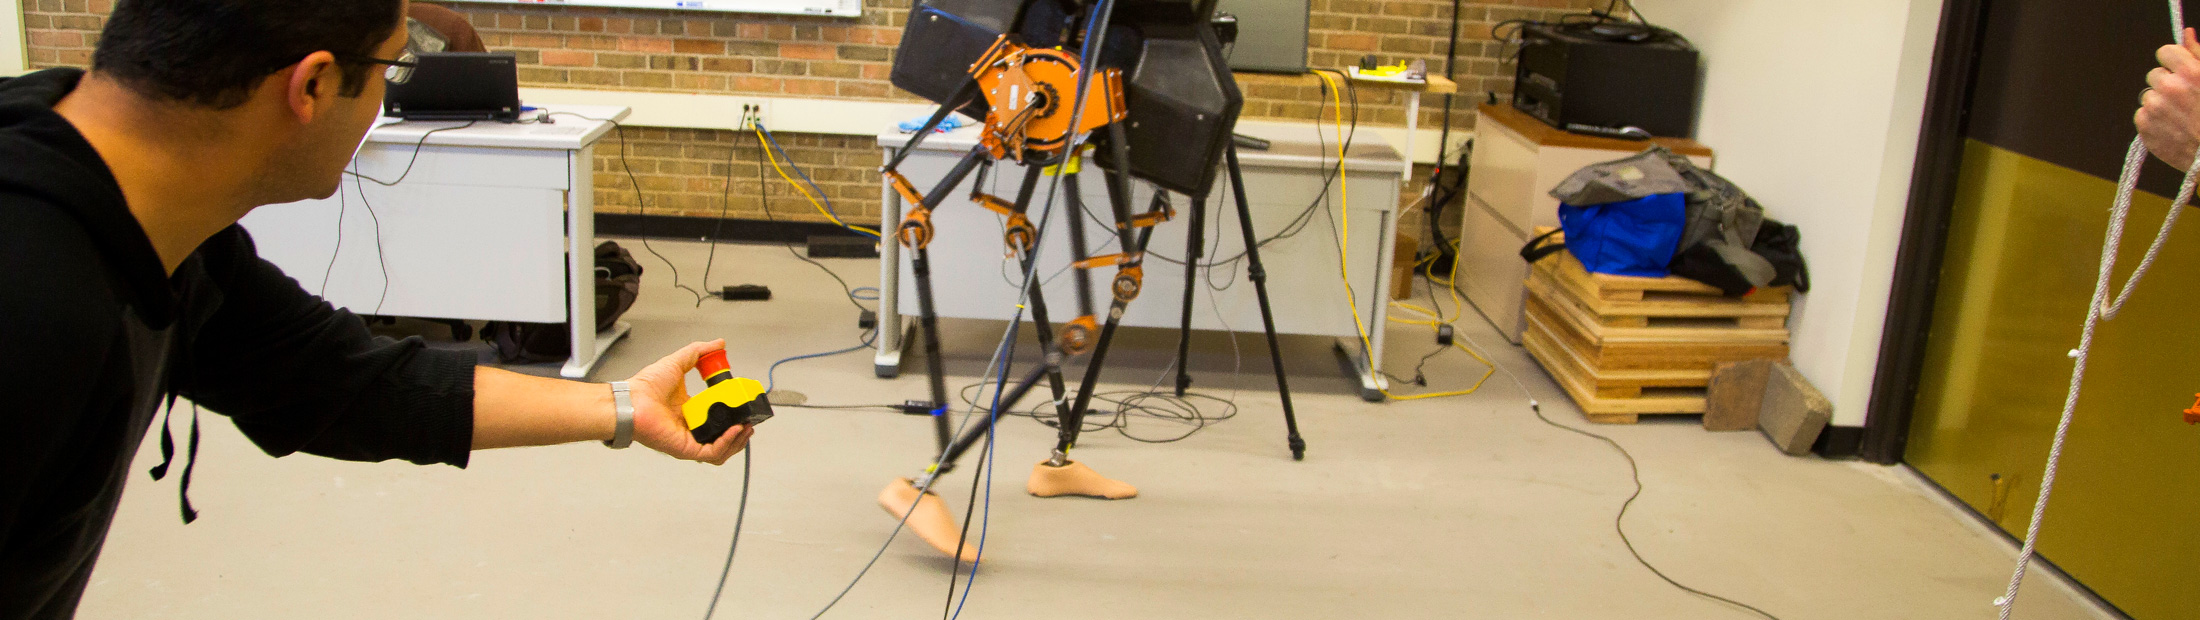 Bipedal robot legs walking in a lab